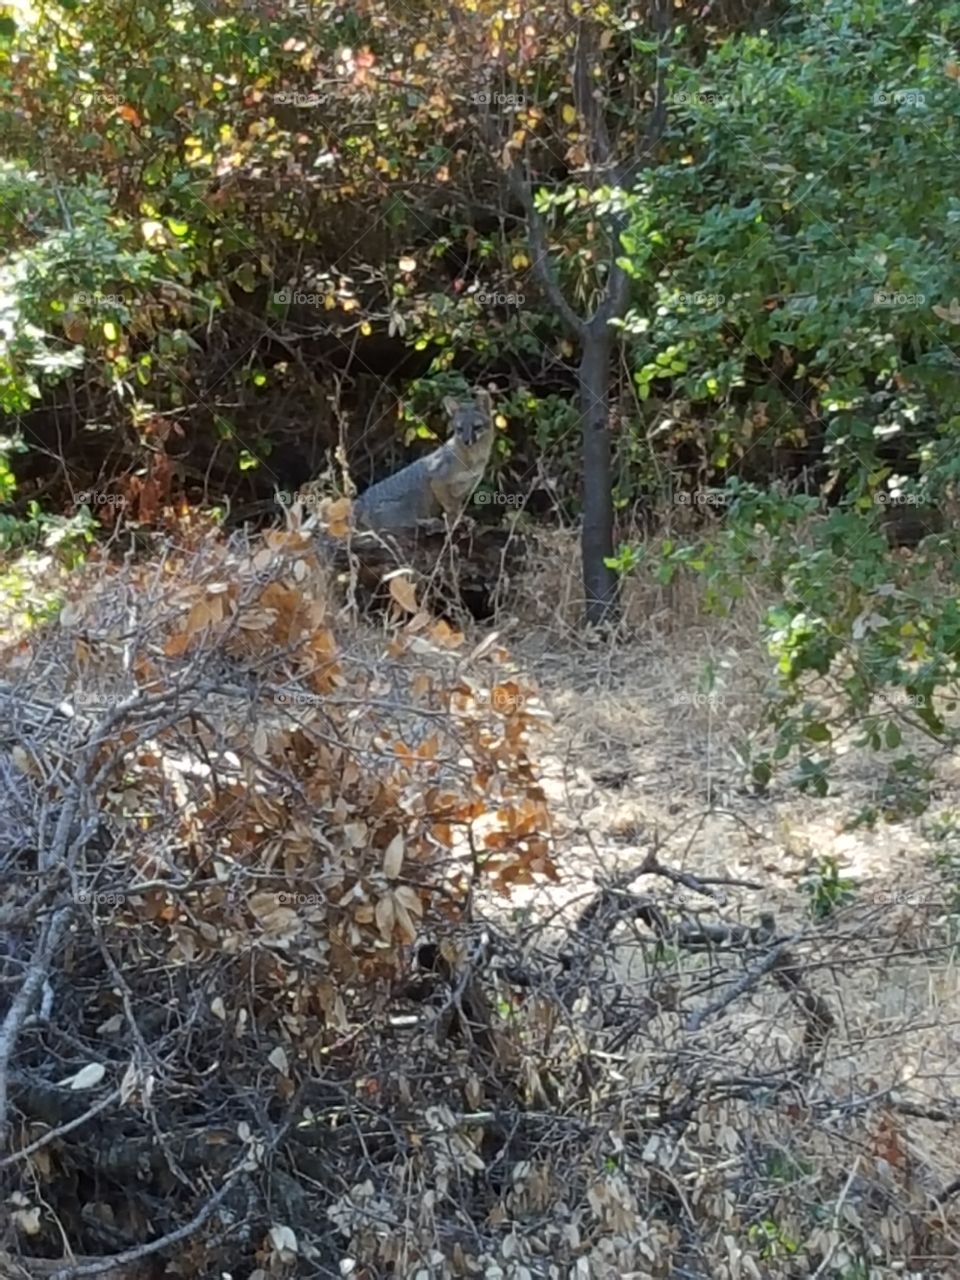 California grey fox